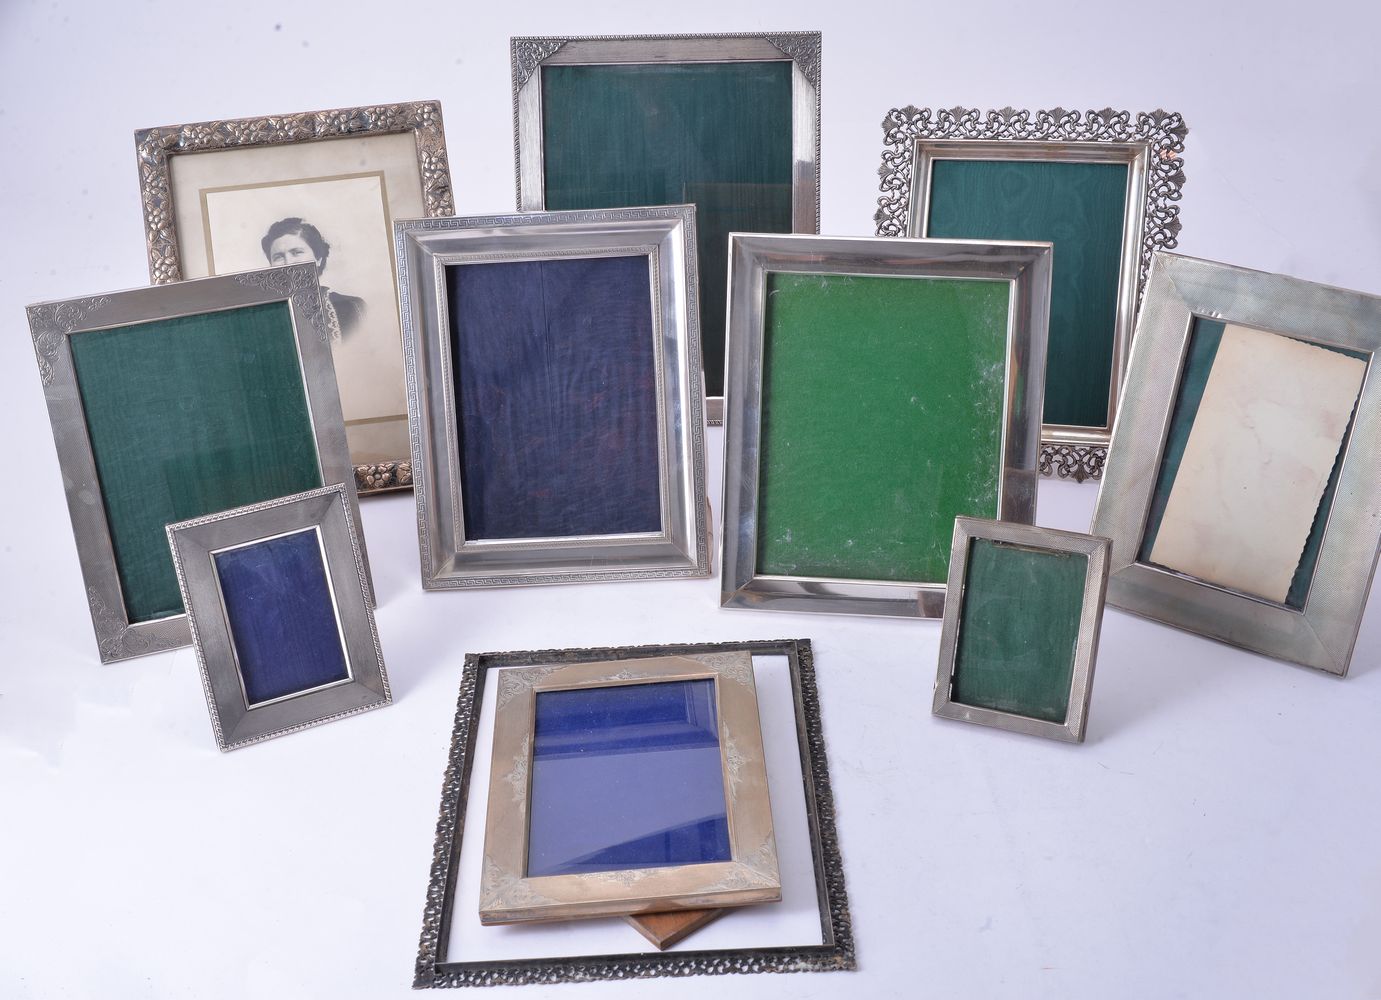 Twelve silver or silver coloured rectangular or shaped rectangular photograph frames